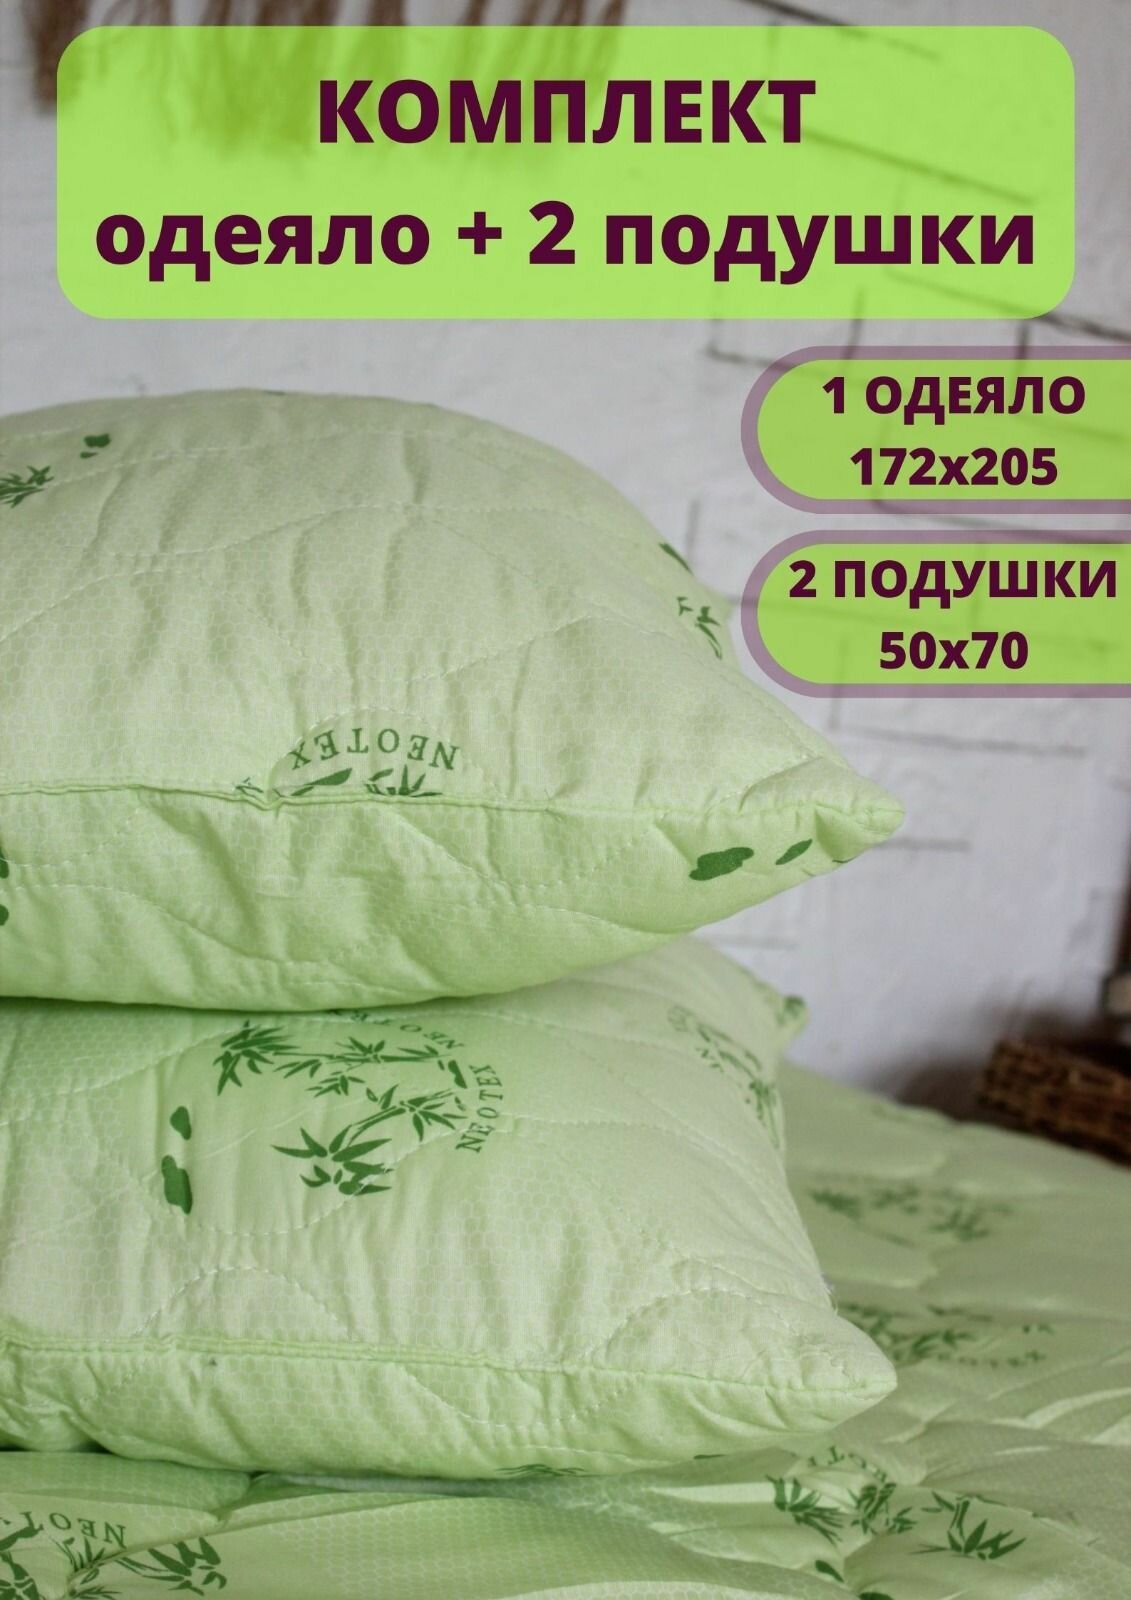 Комплект 2 подушки 50х70 и двуспальное одеяло 172х205 - фотография № 1